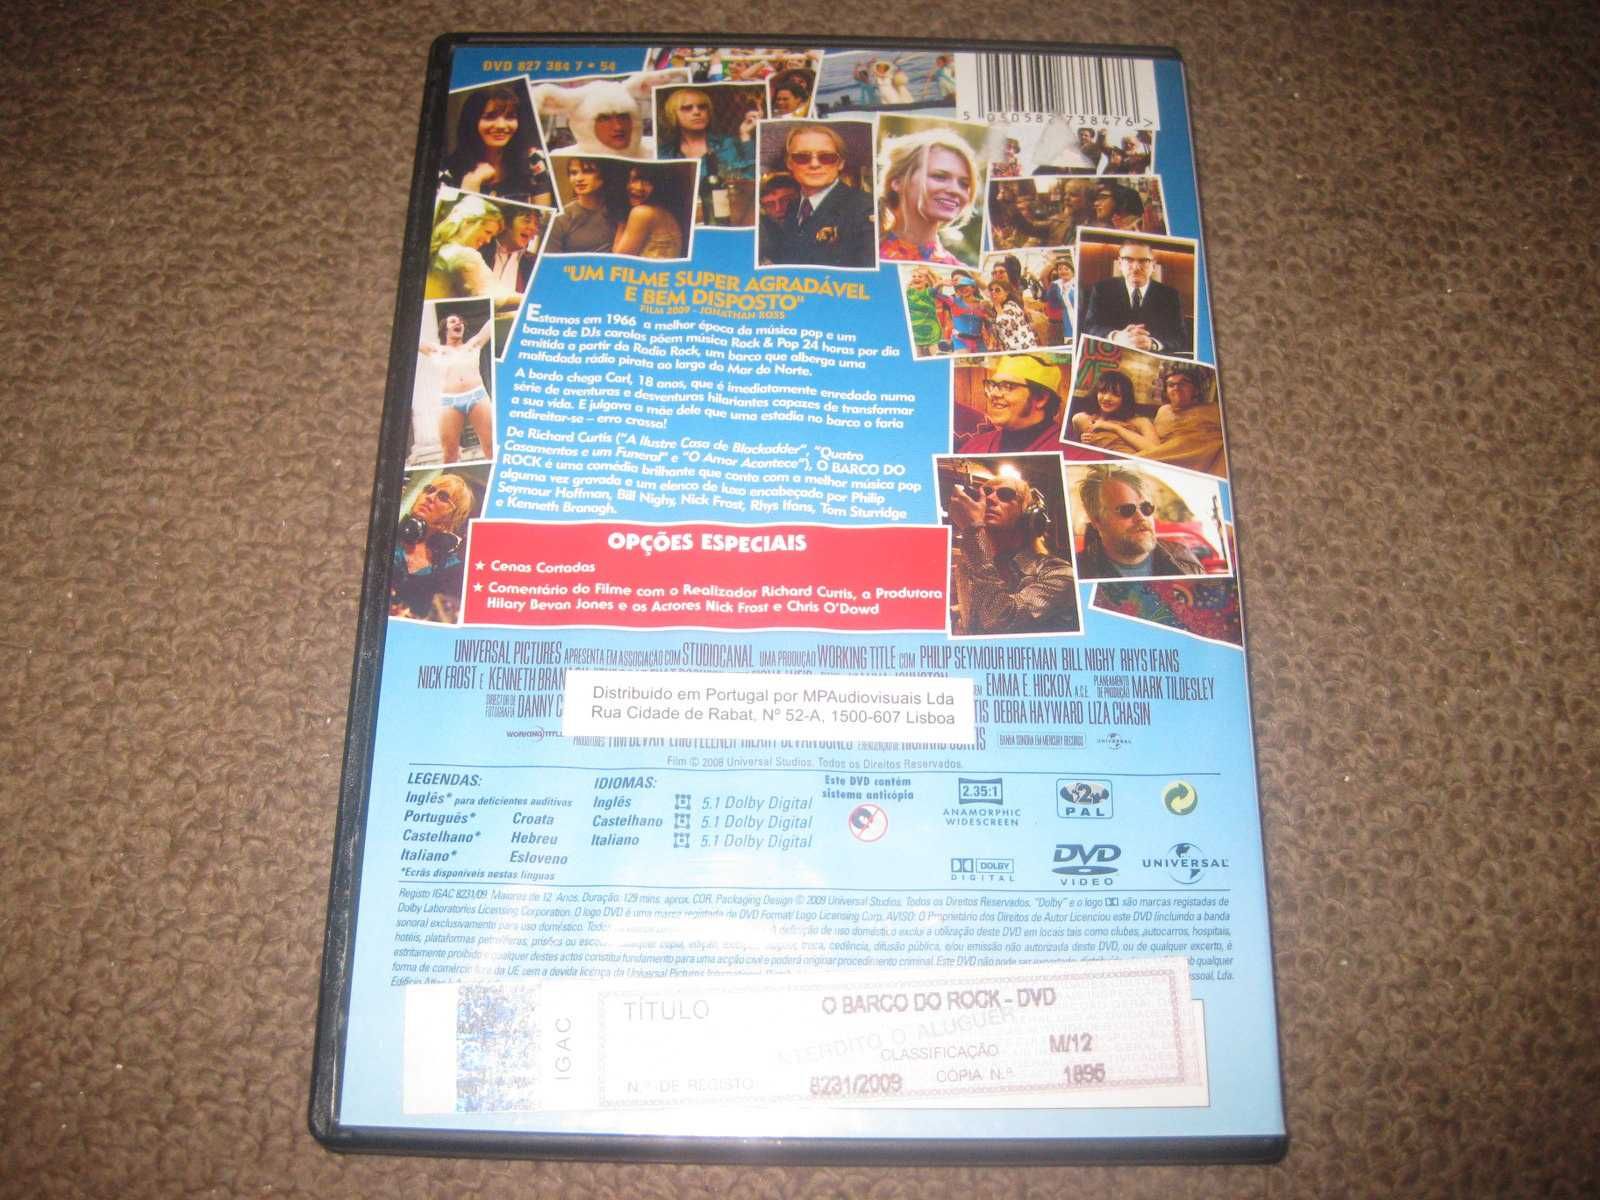 DVD "O Barco do Rock" com Philip Seymour Hoffman